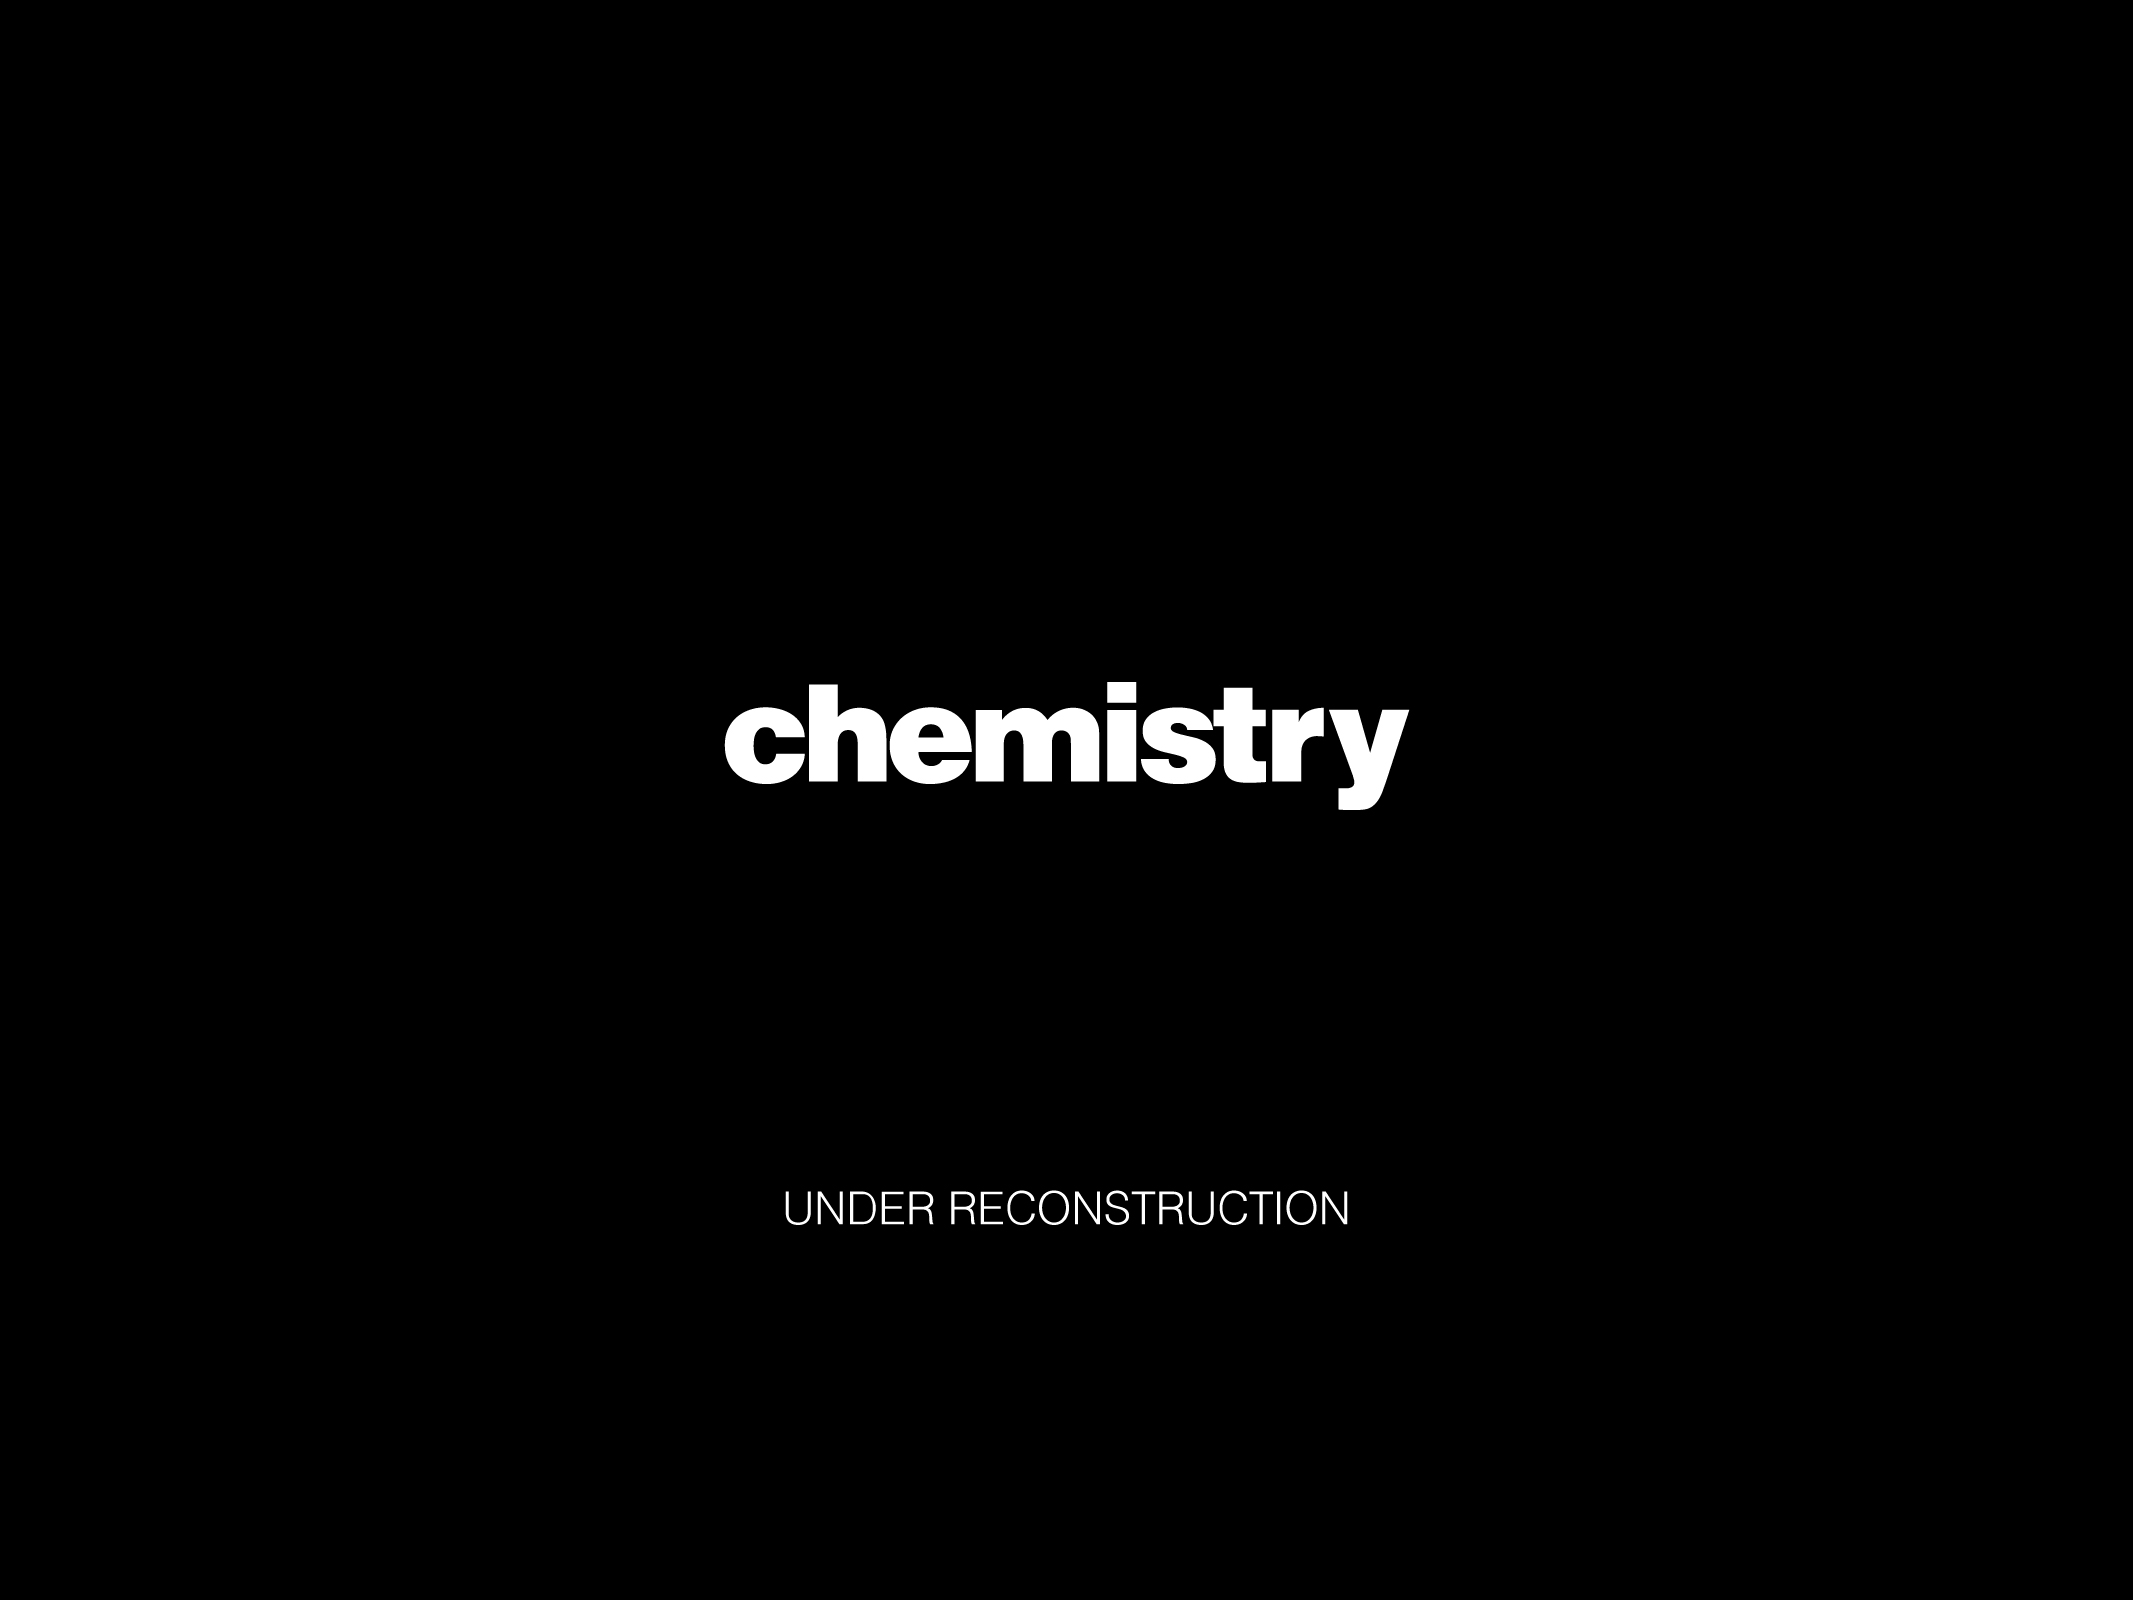 chemistry website is under reconstraction